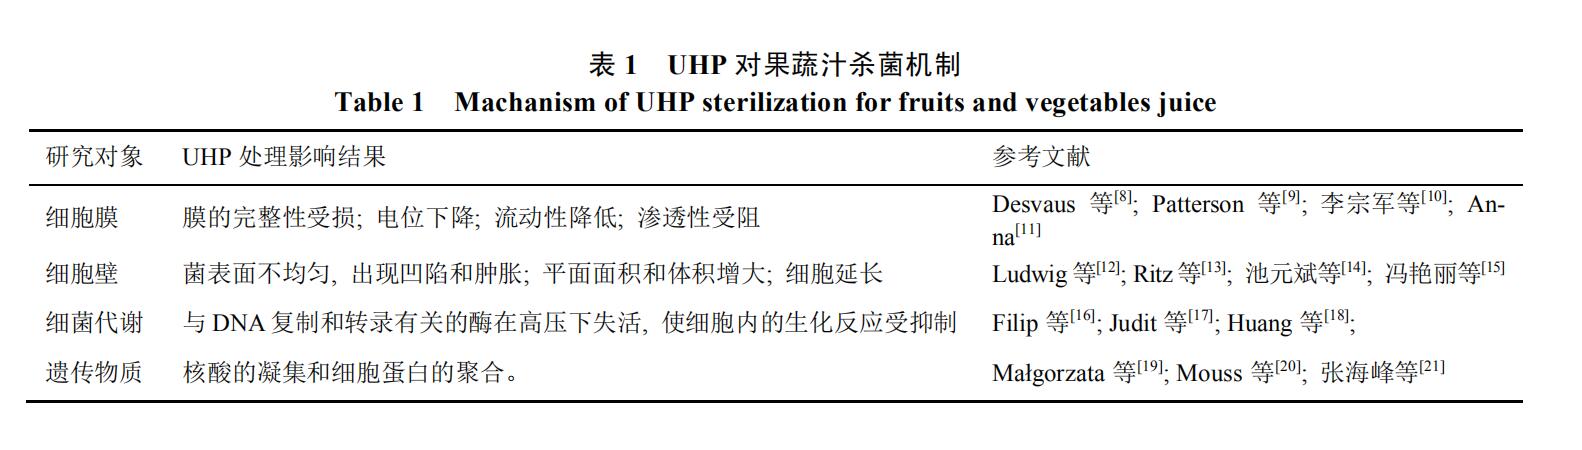 HPP对果蔬汁杀菌条件的优化